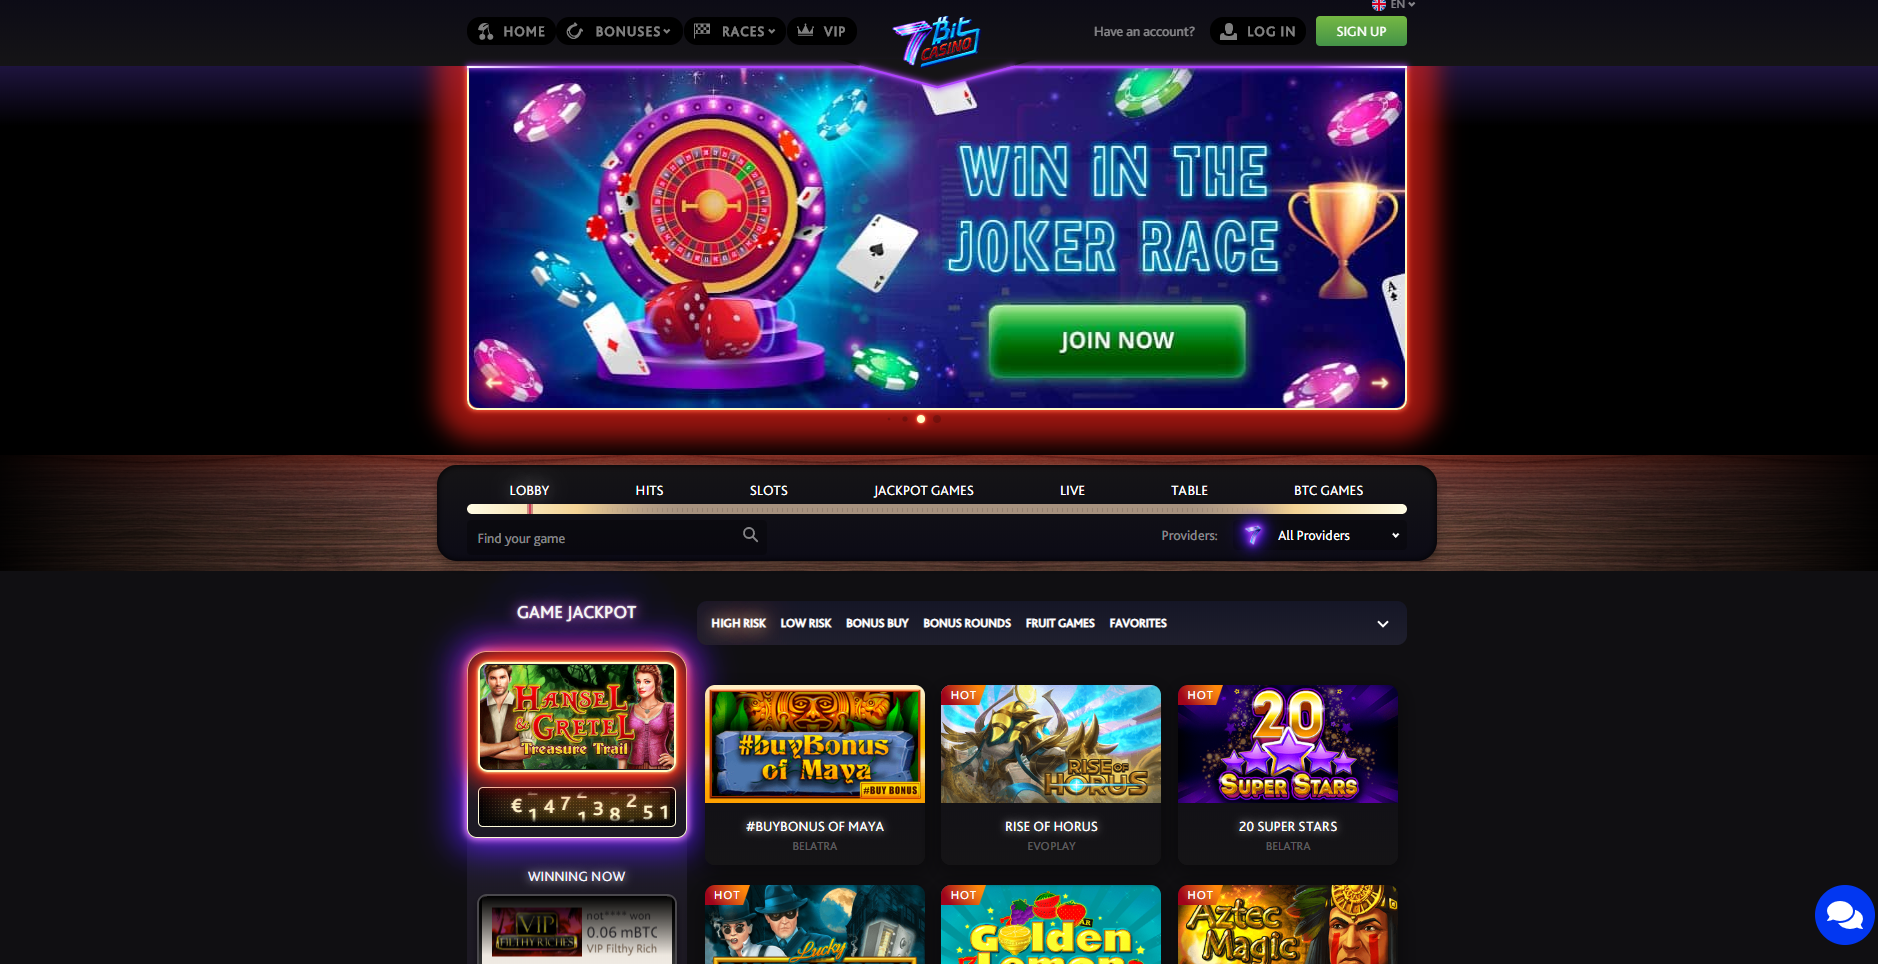 7bit casino games - joker race rise of horus aztec magic hansel gretel roulette cards